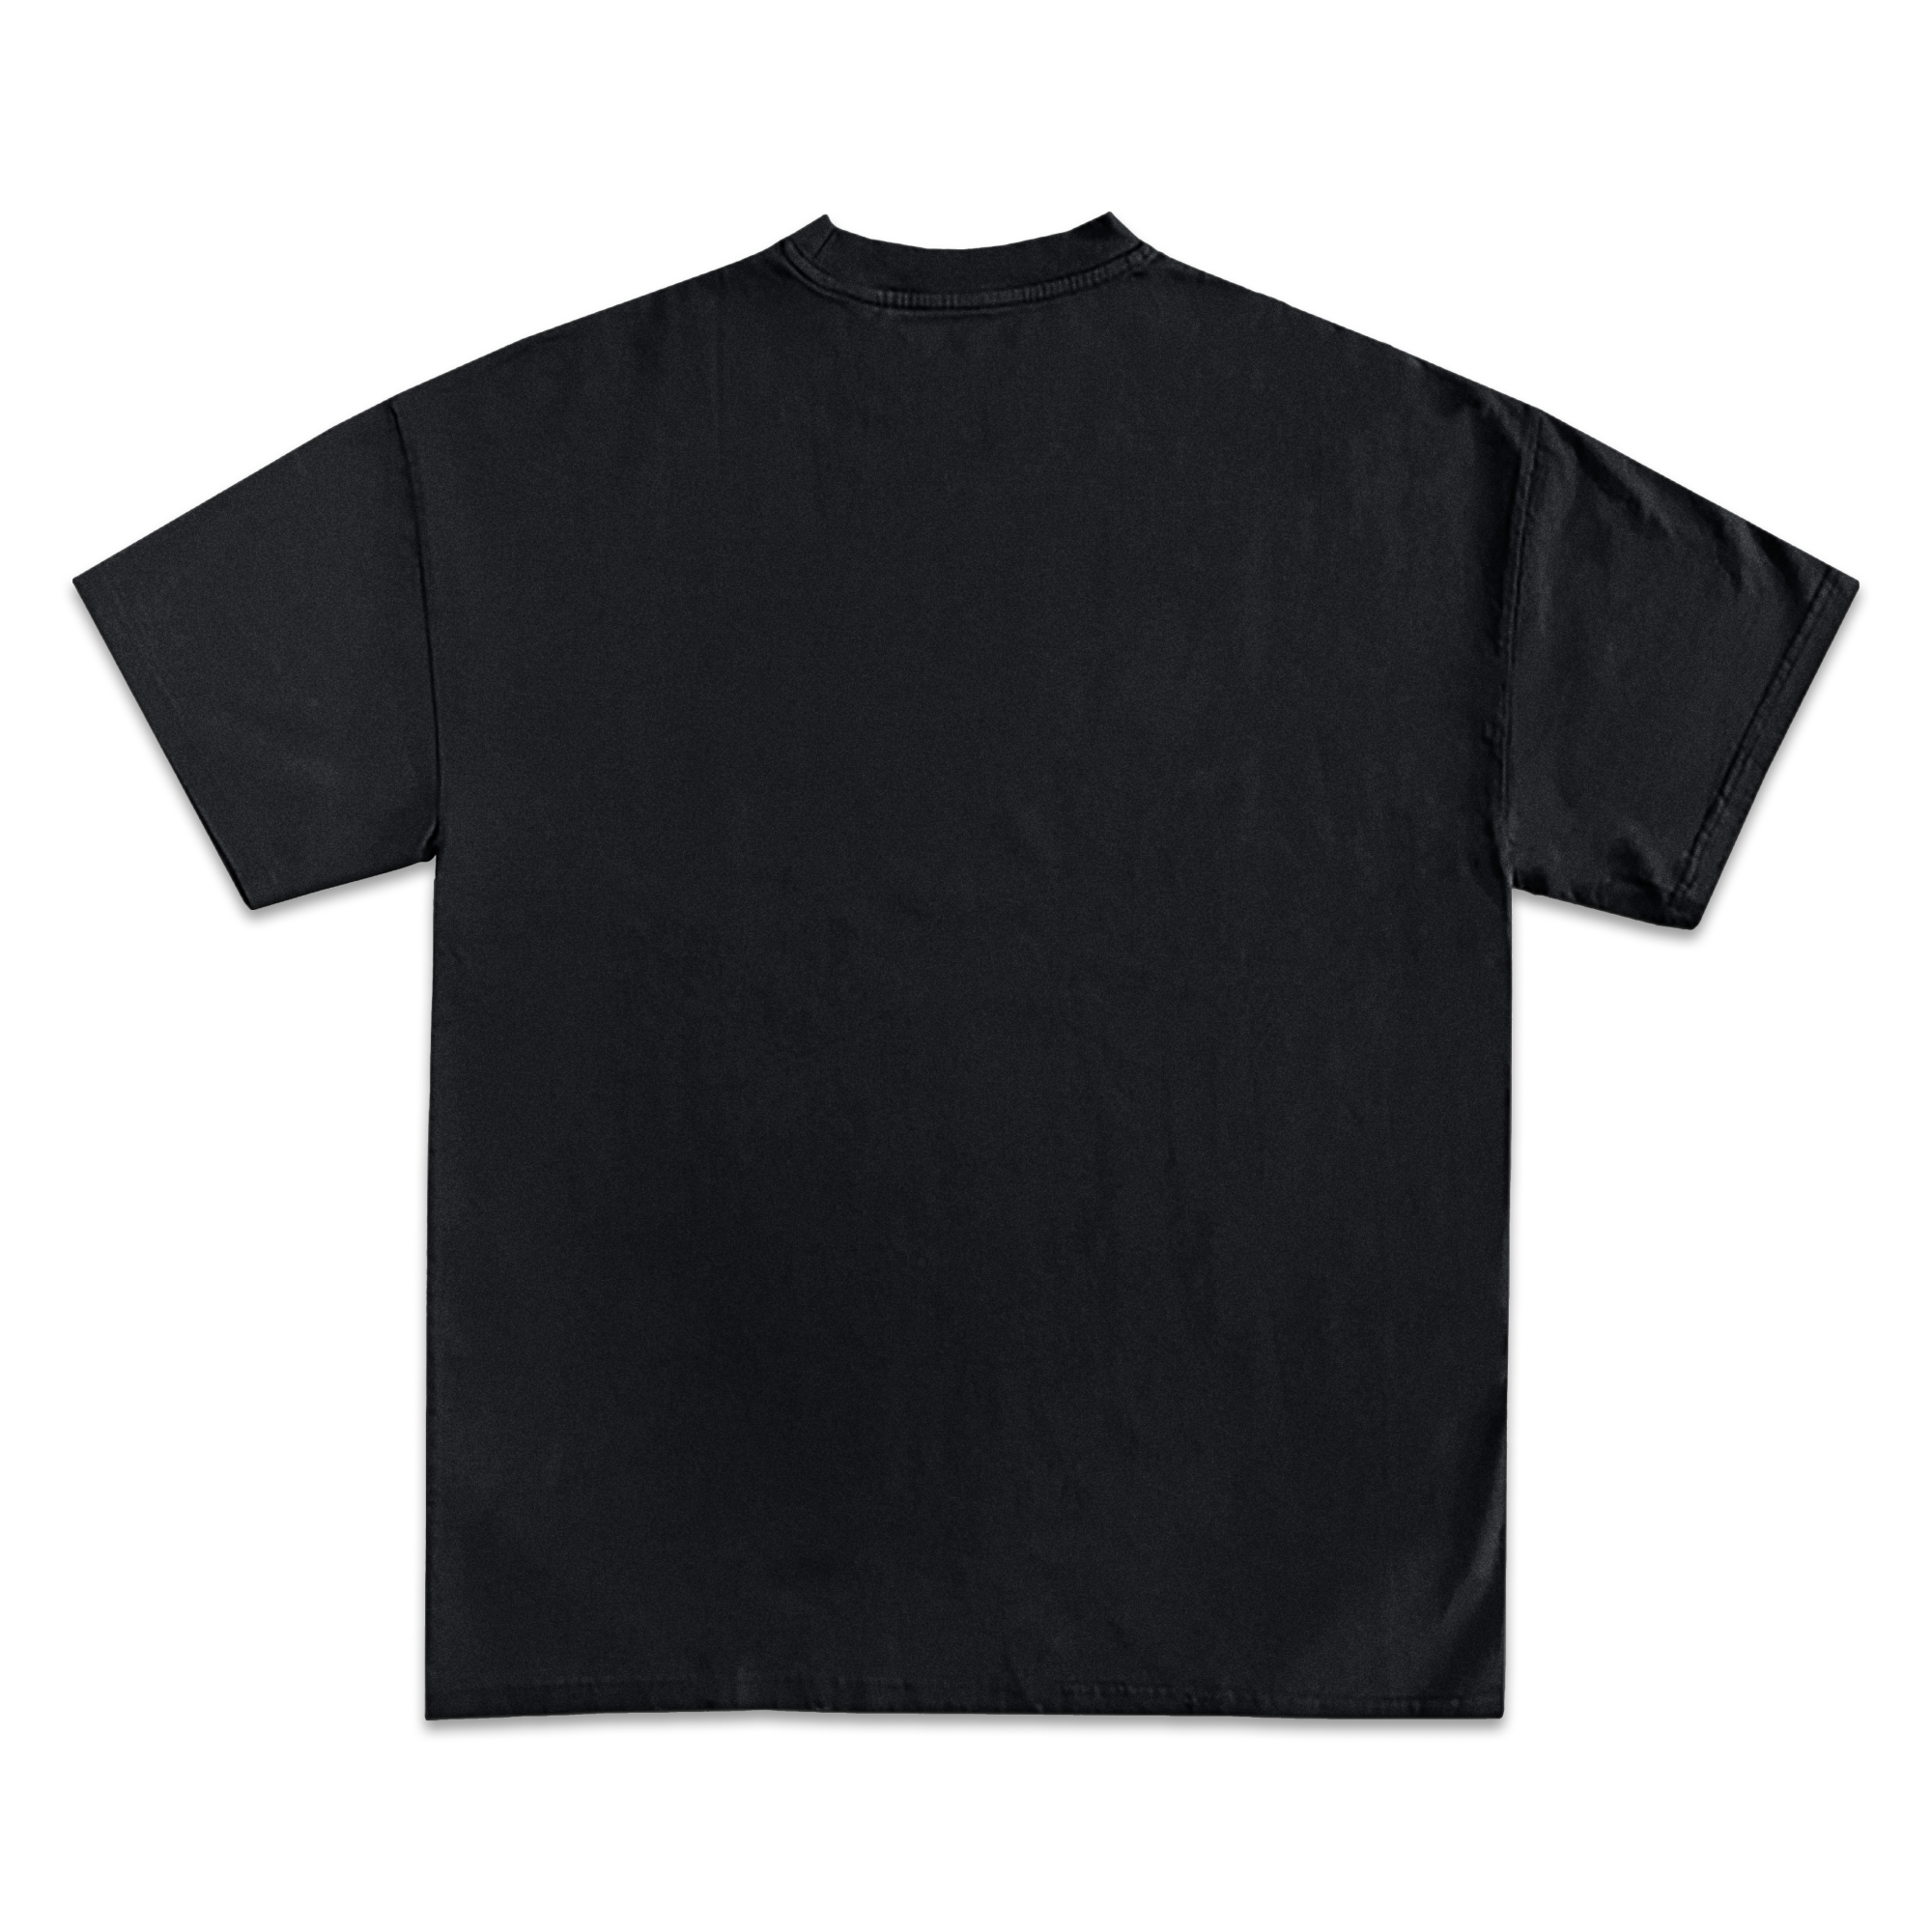 Playboi Carti Graphic T-Shirt